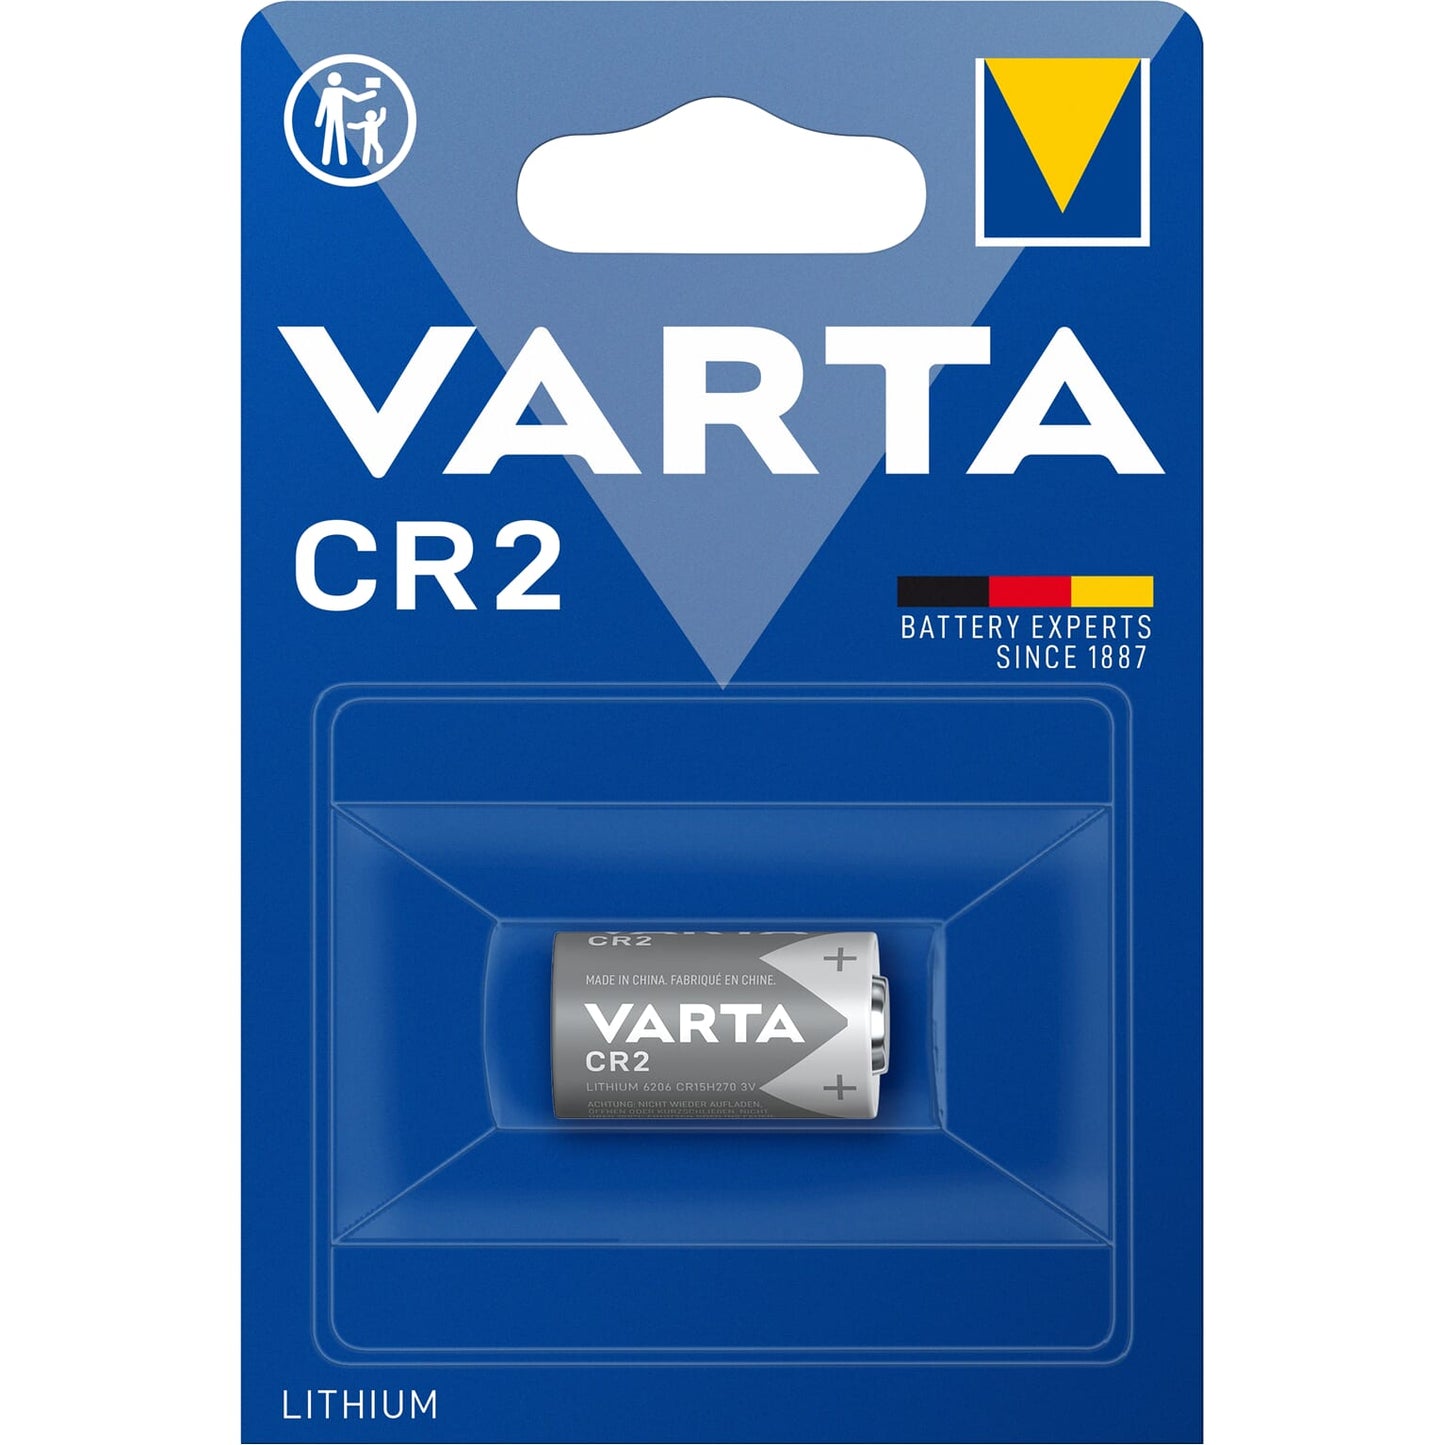 Varta Battery CR2 Lithium 3V